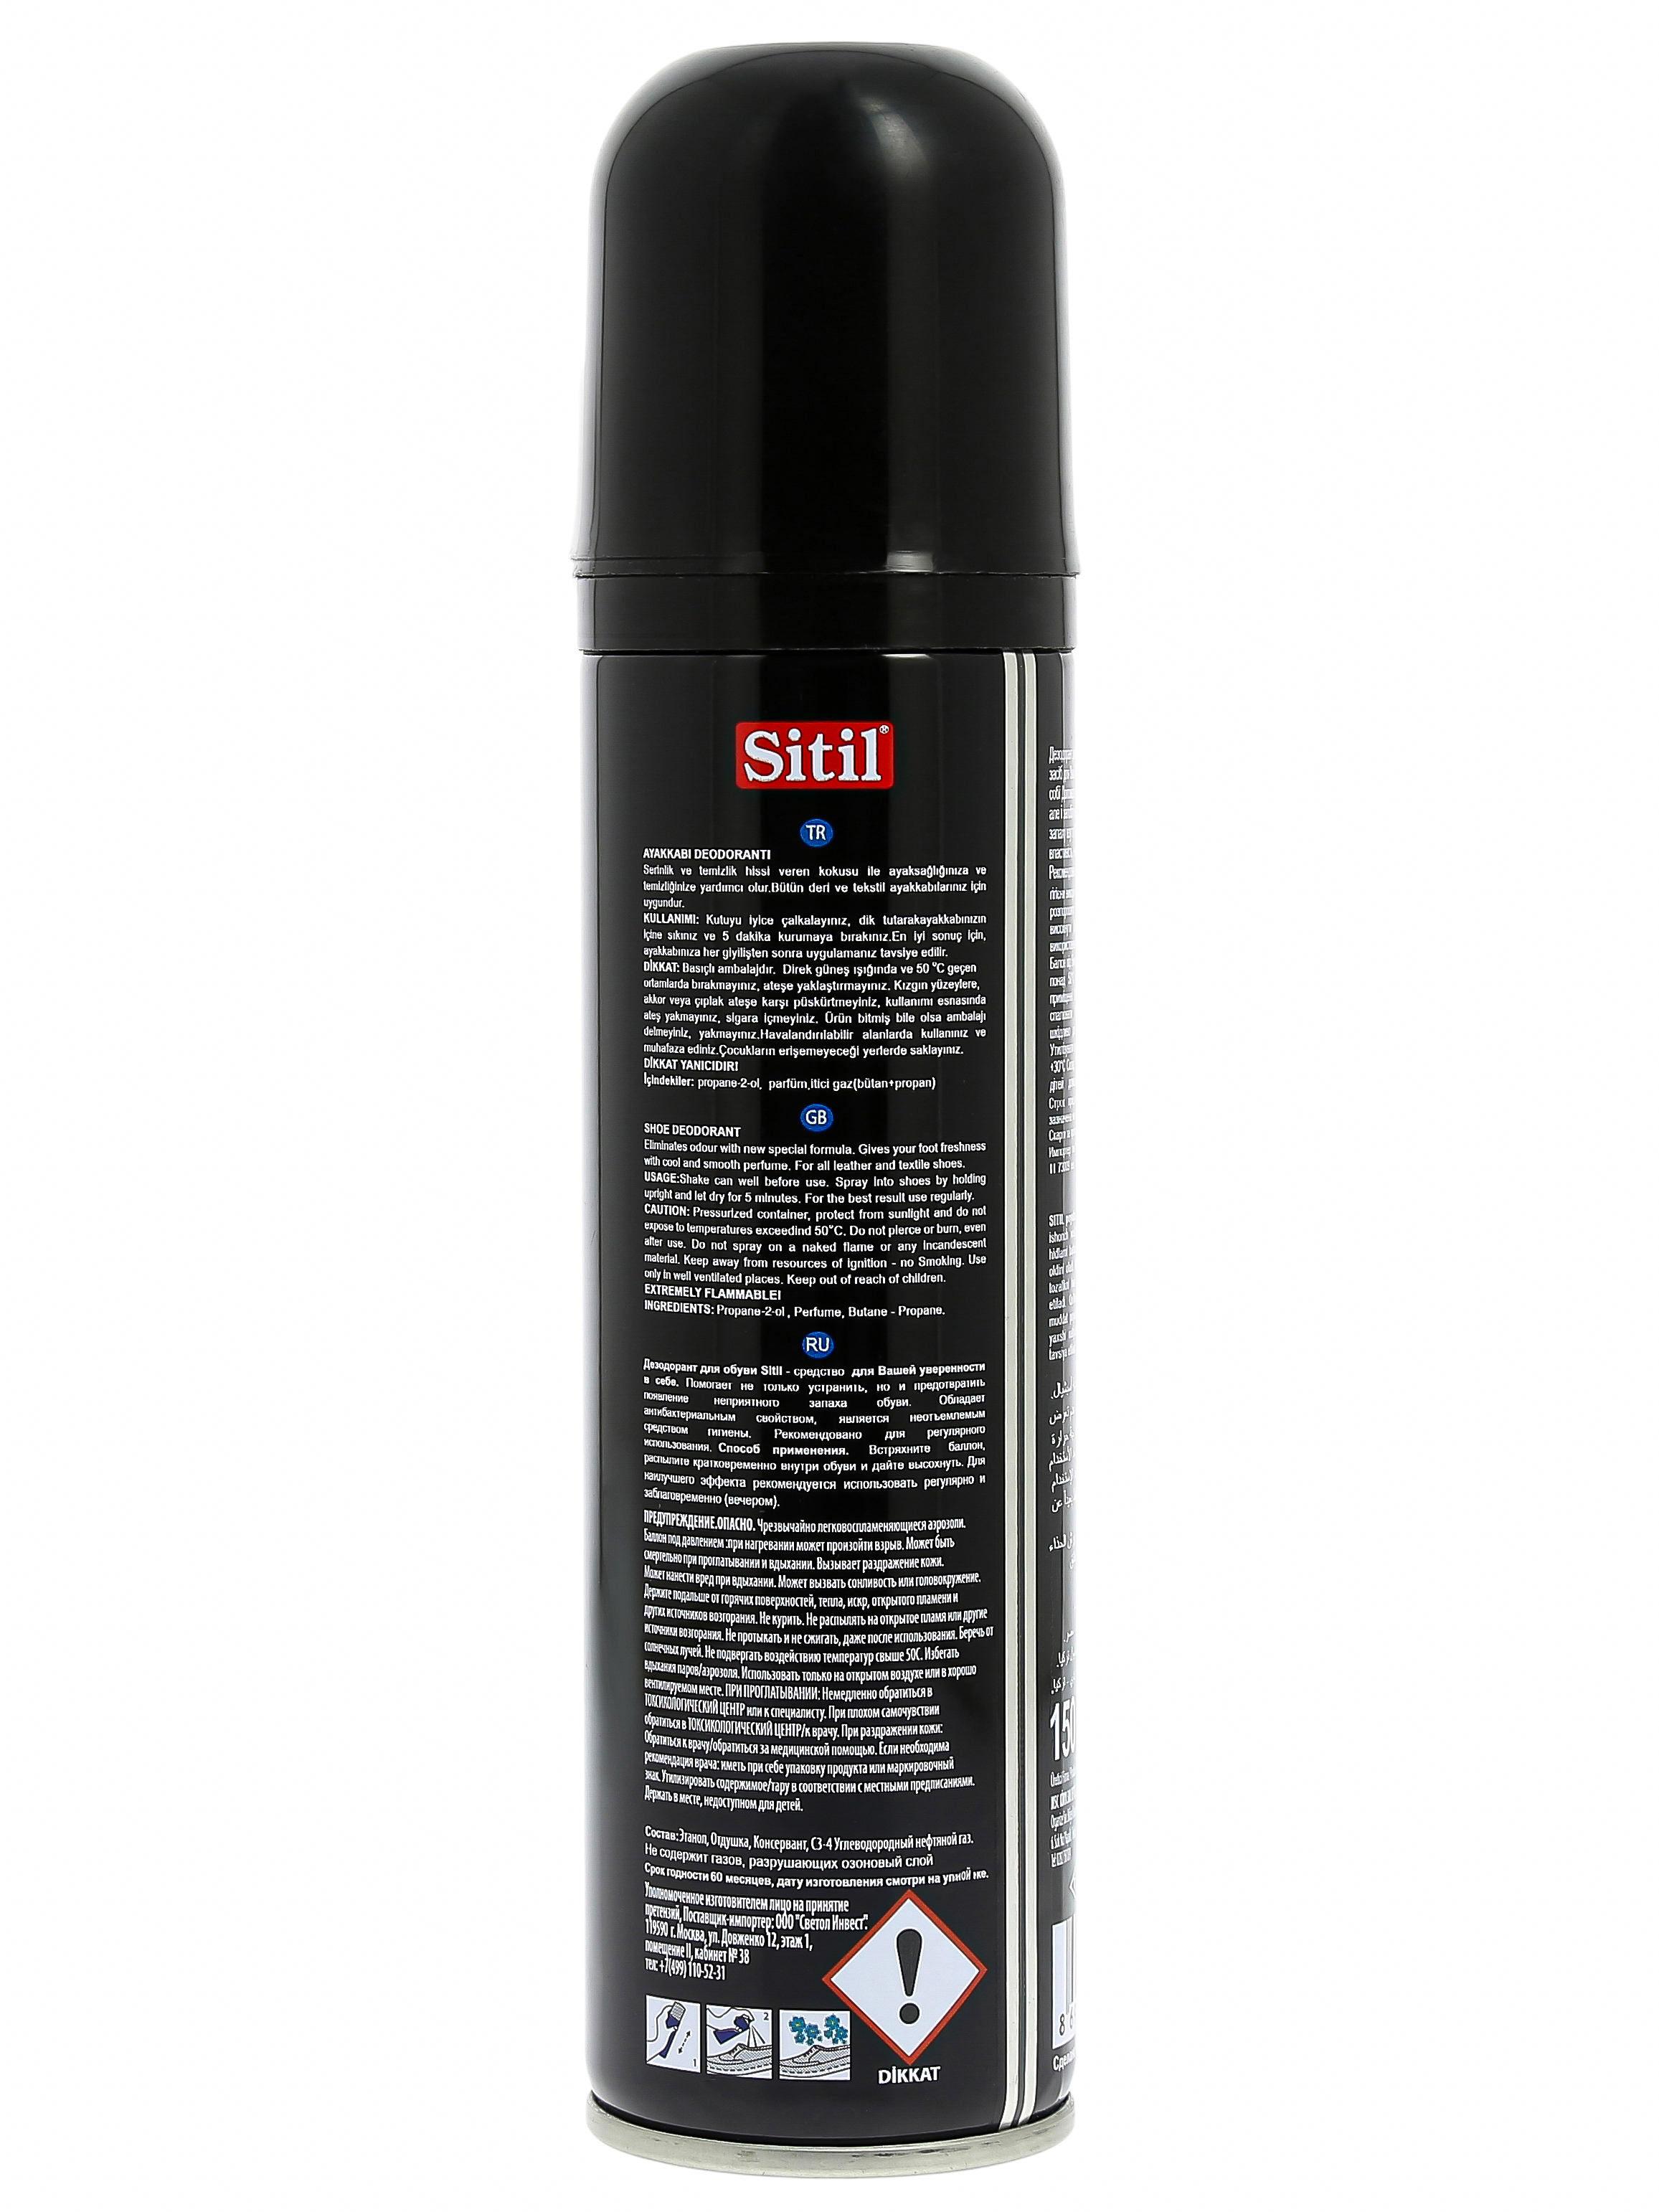 Дезодорант для обуви Sitil Black edition Shoe Deodorant 150 ml 123 SNK